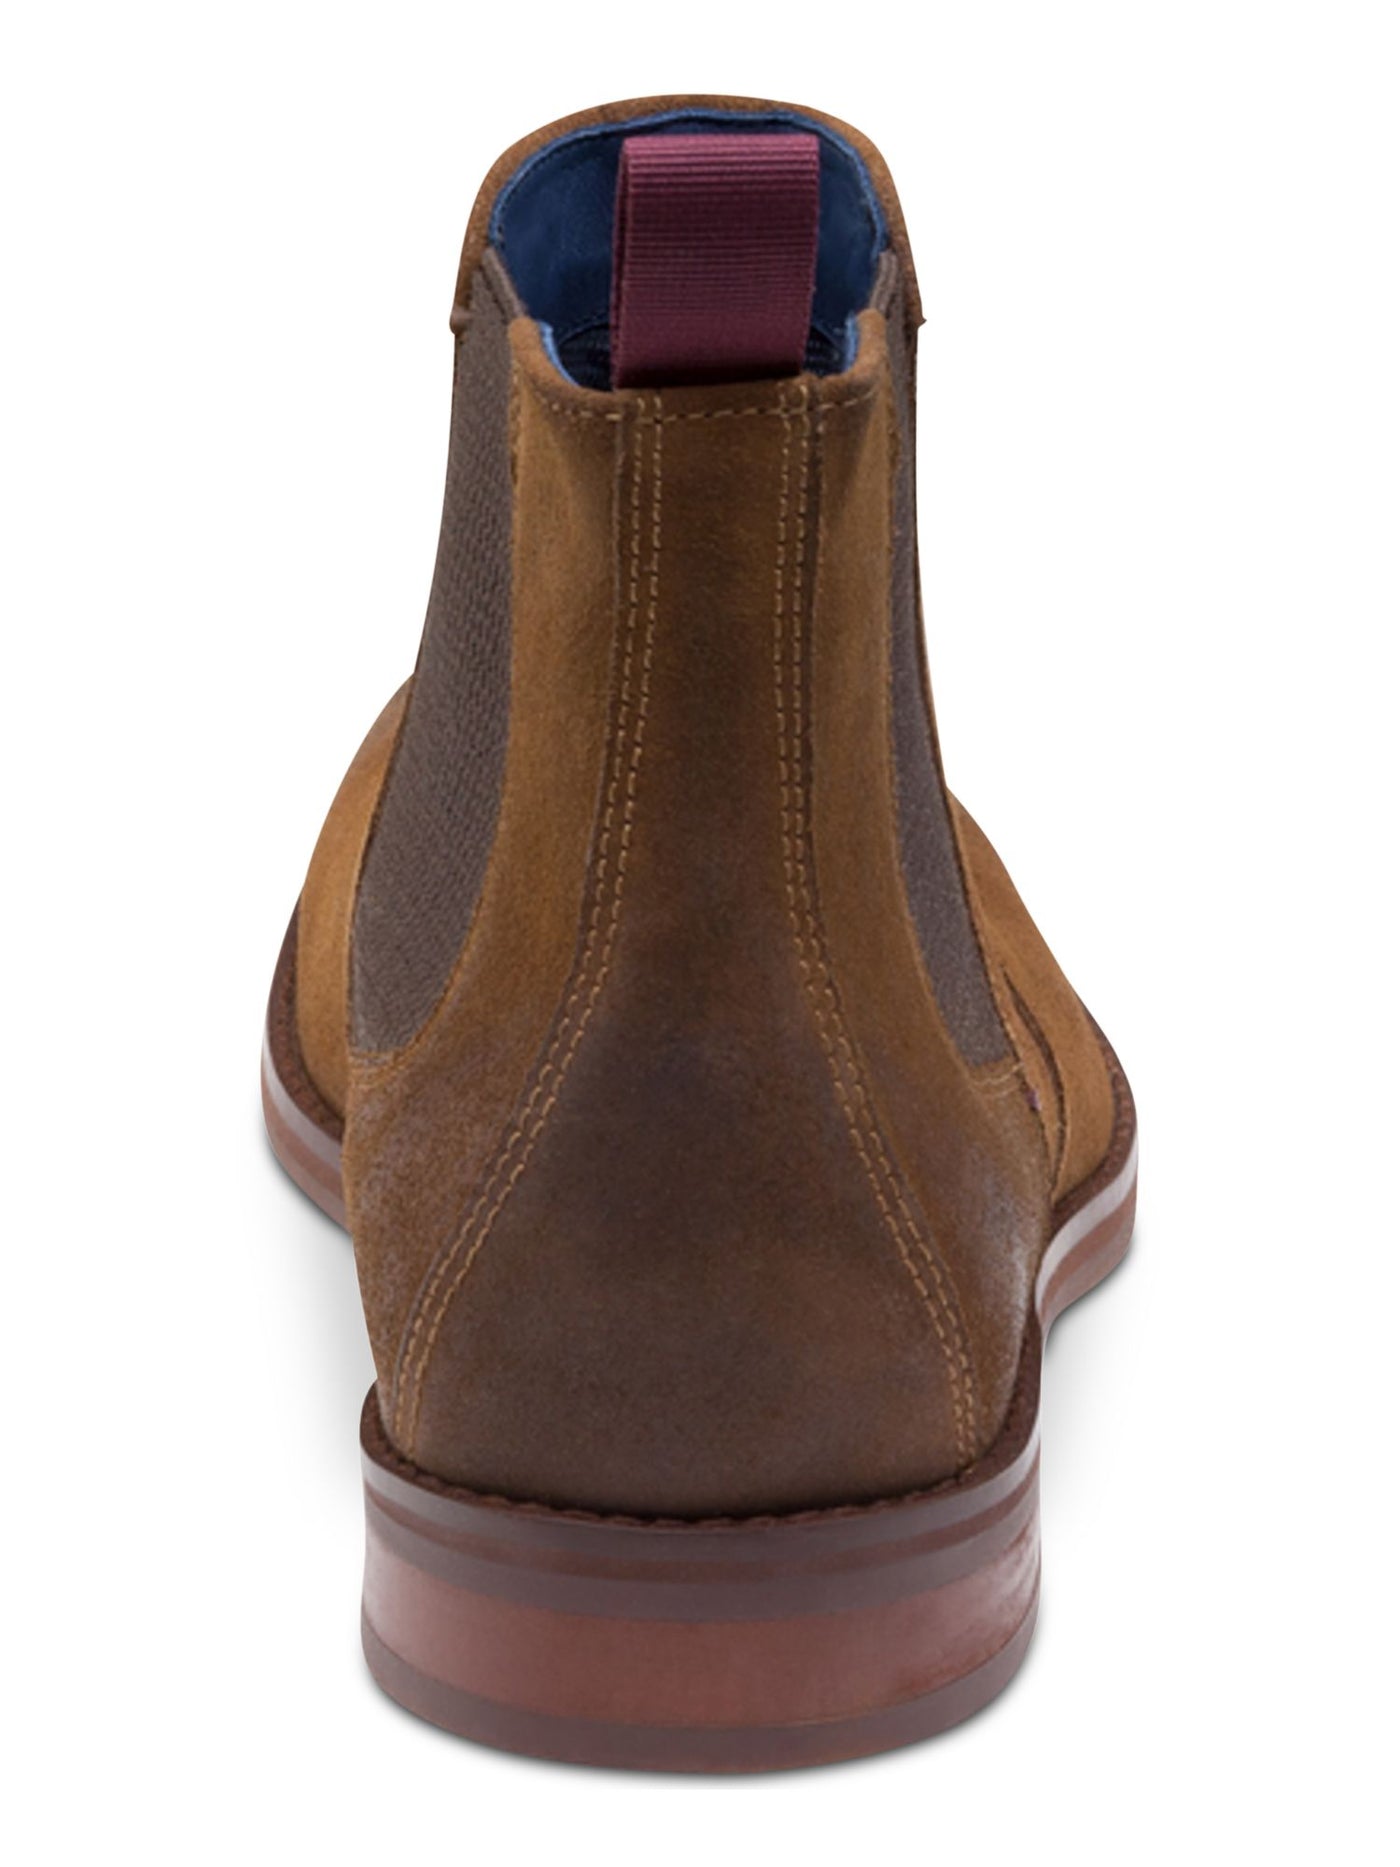 JOHNSTON & MURPHY Mens Brown Goring Comfort Danby Round Toe Block Heel Leather Boots Shoes 13 M